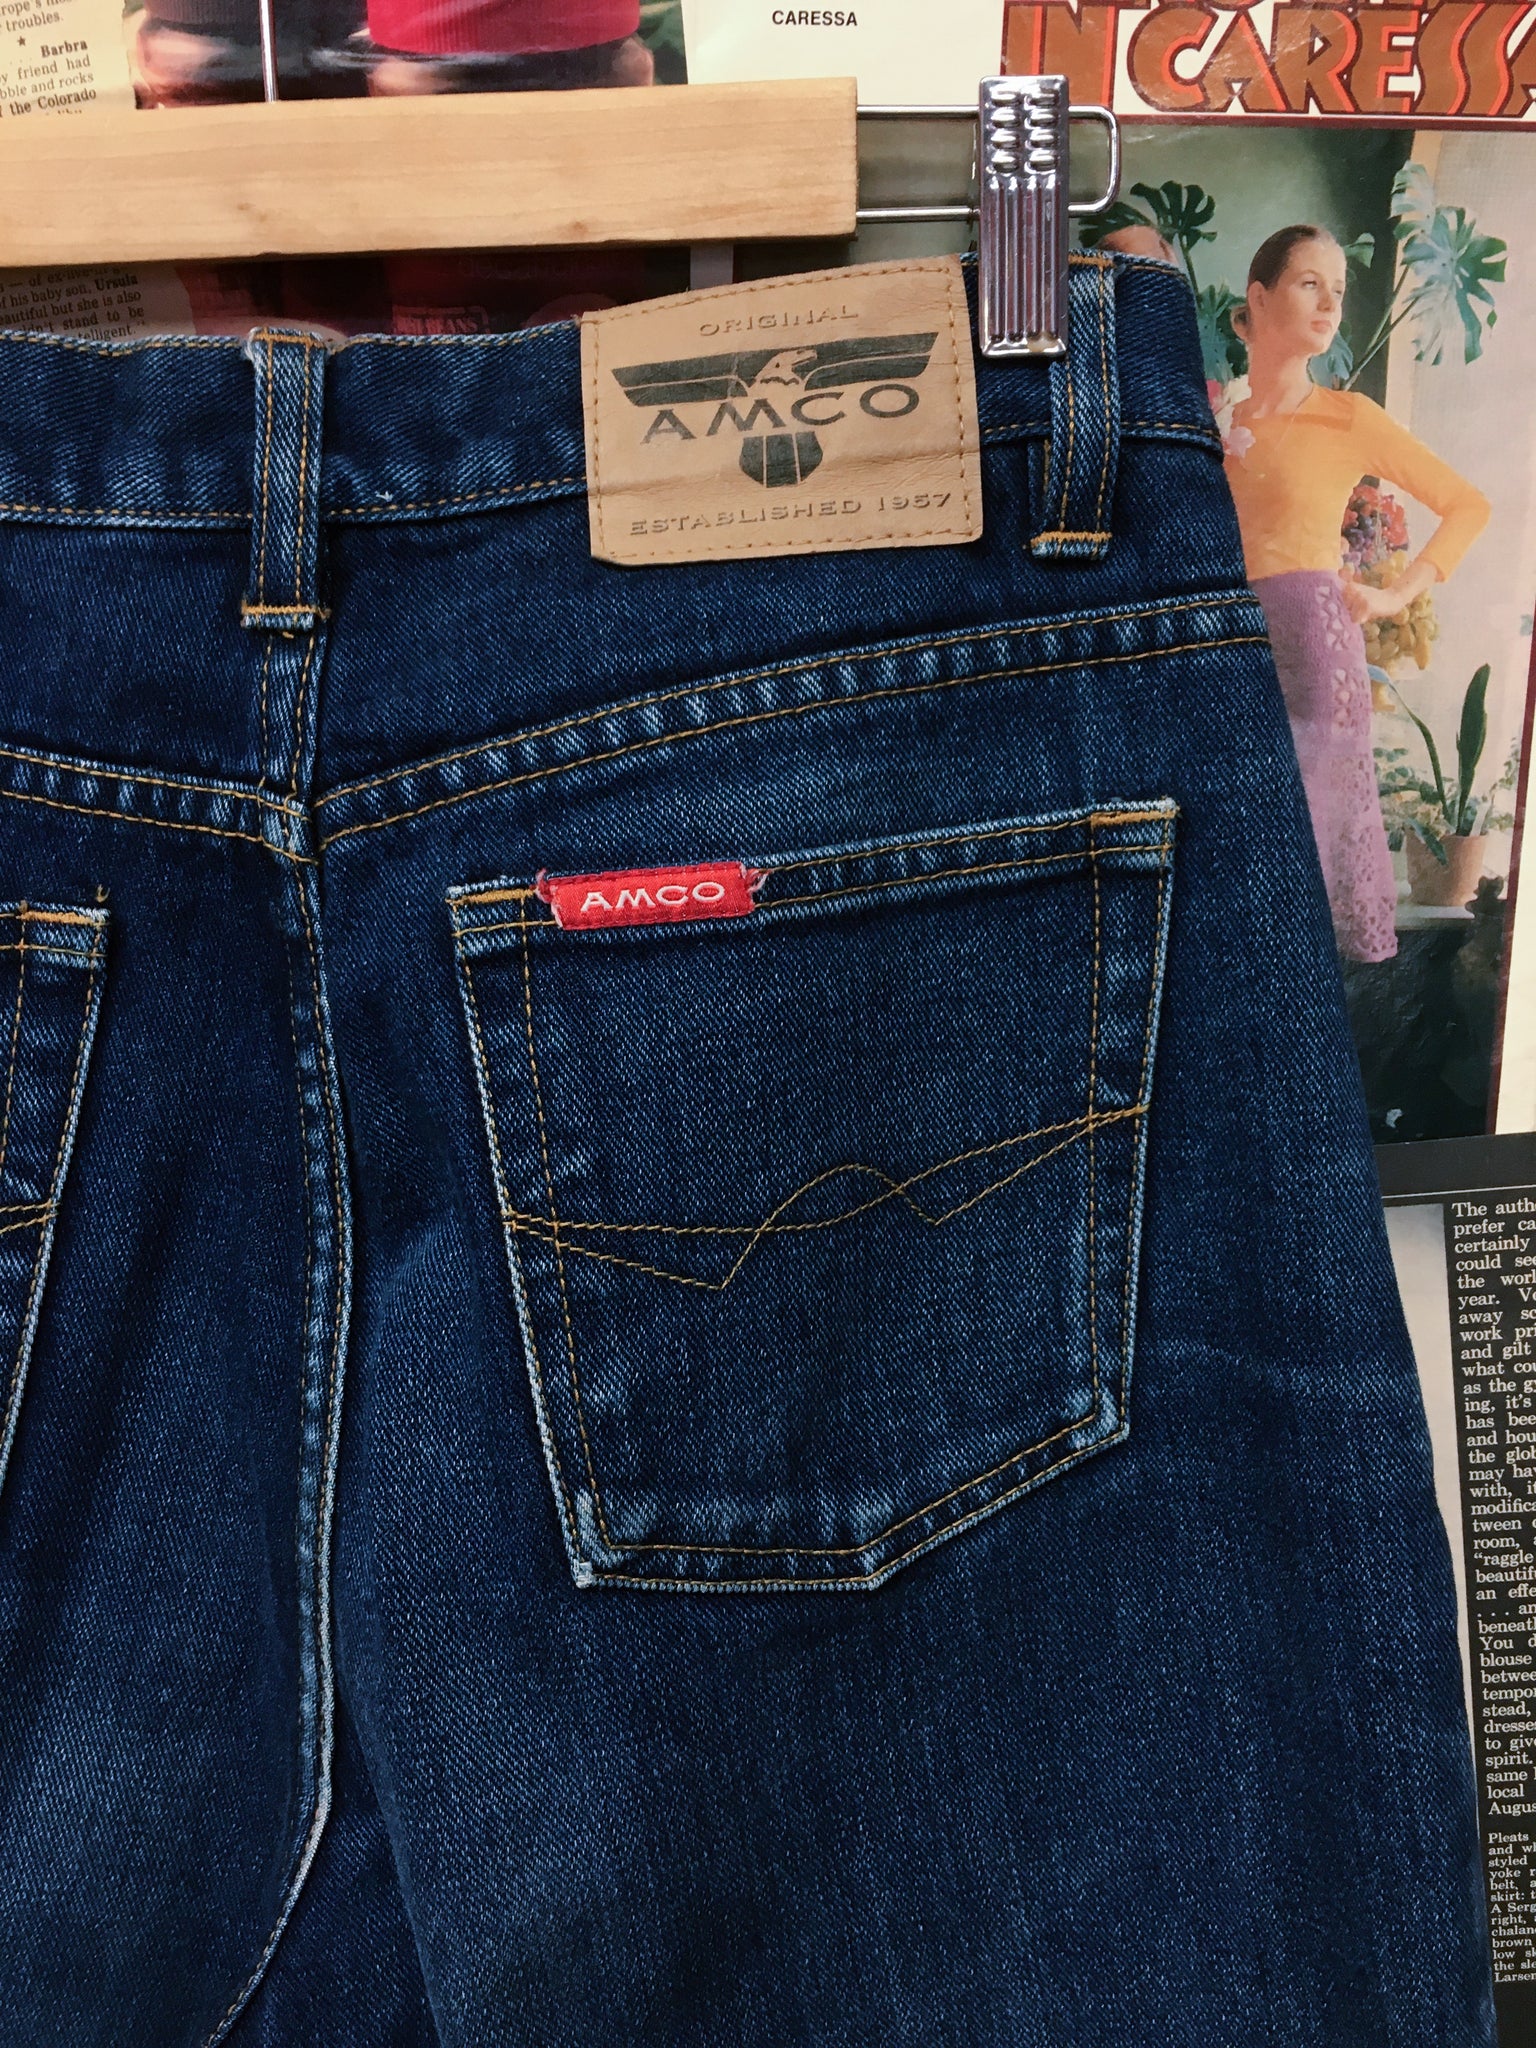 ripped jeans mens fashion skinny